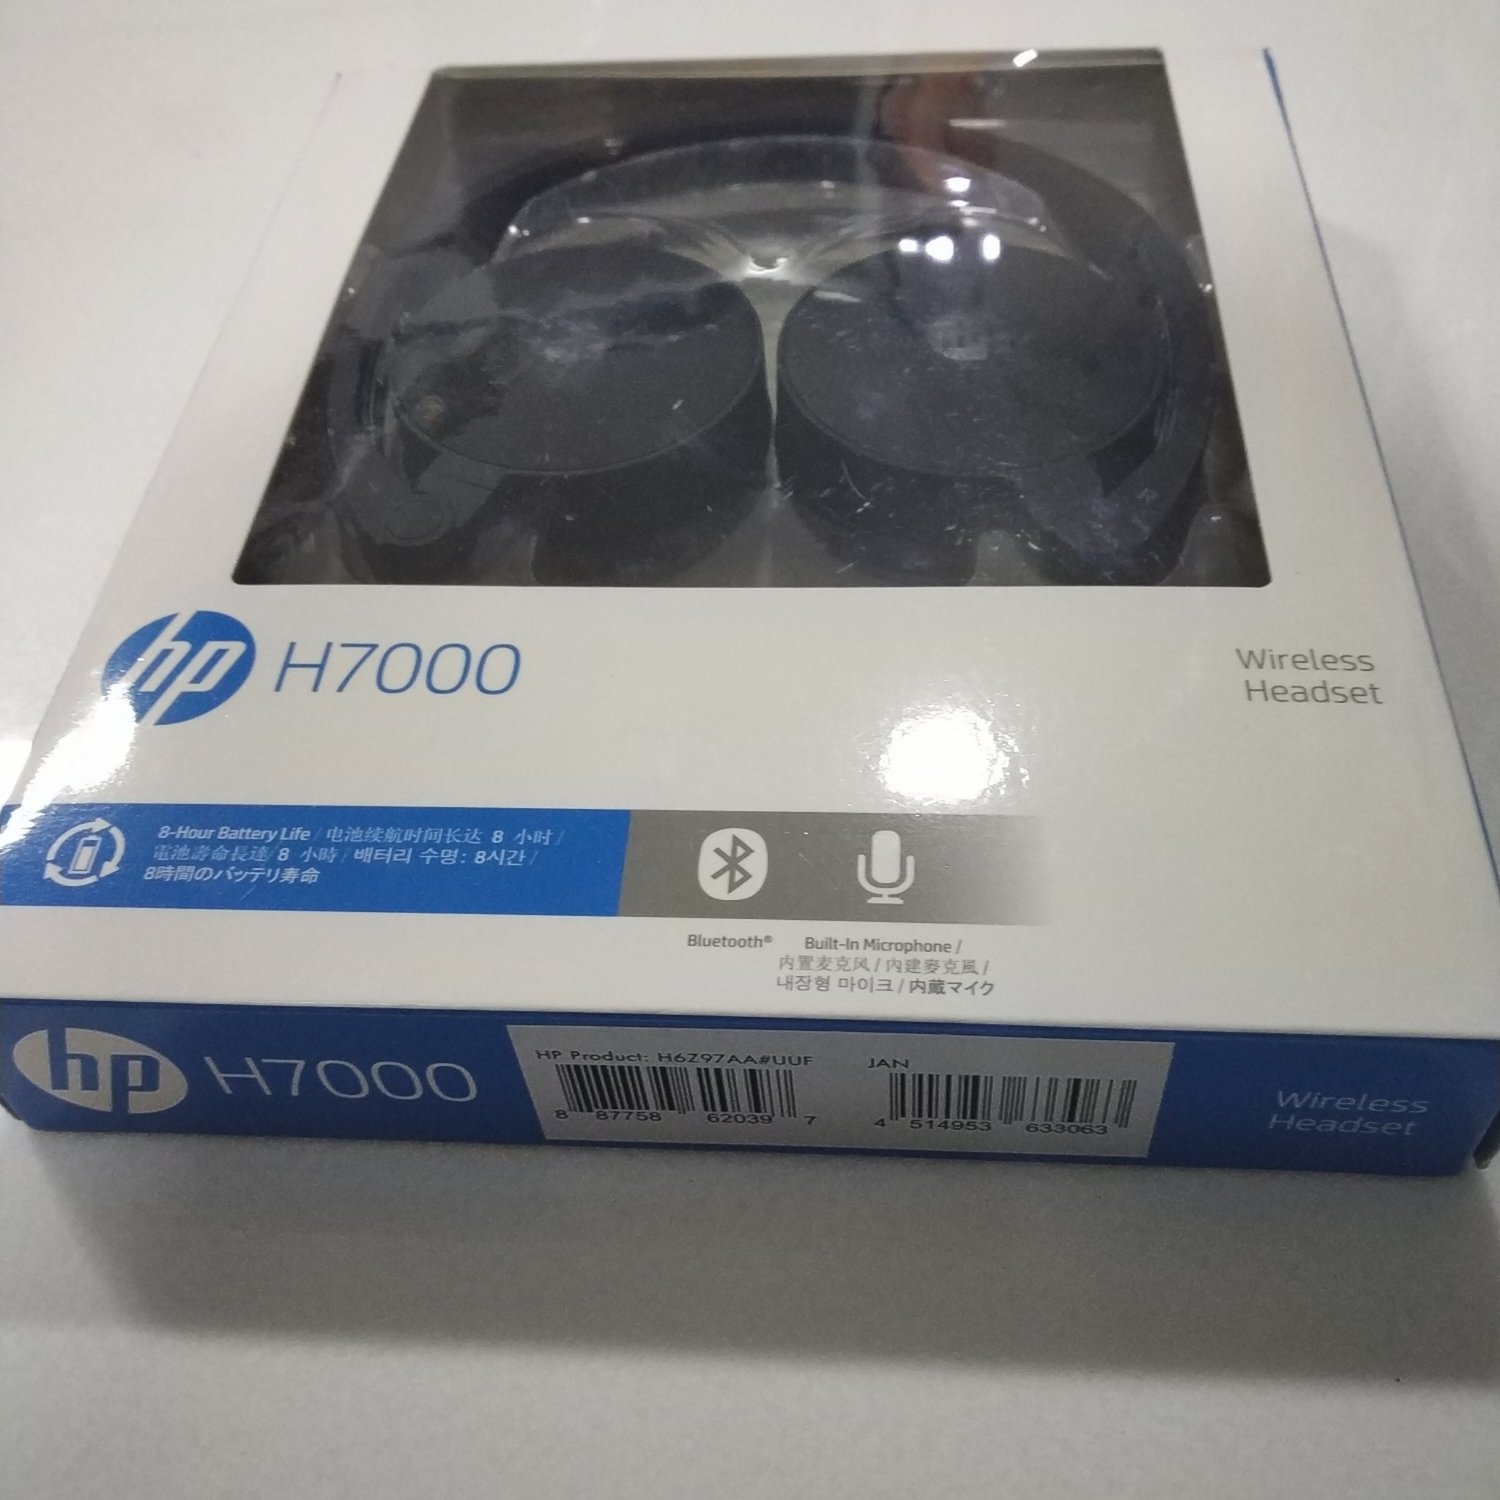 Rs.4092 - HP H7000 Wireless Headset, Black, H6Z97AA